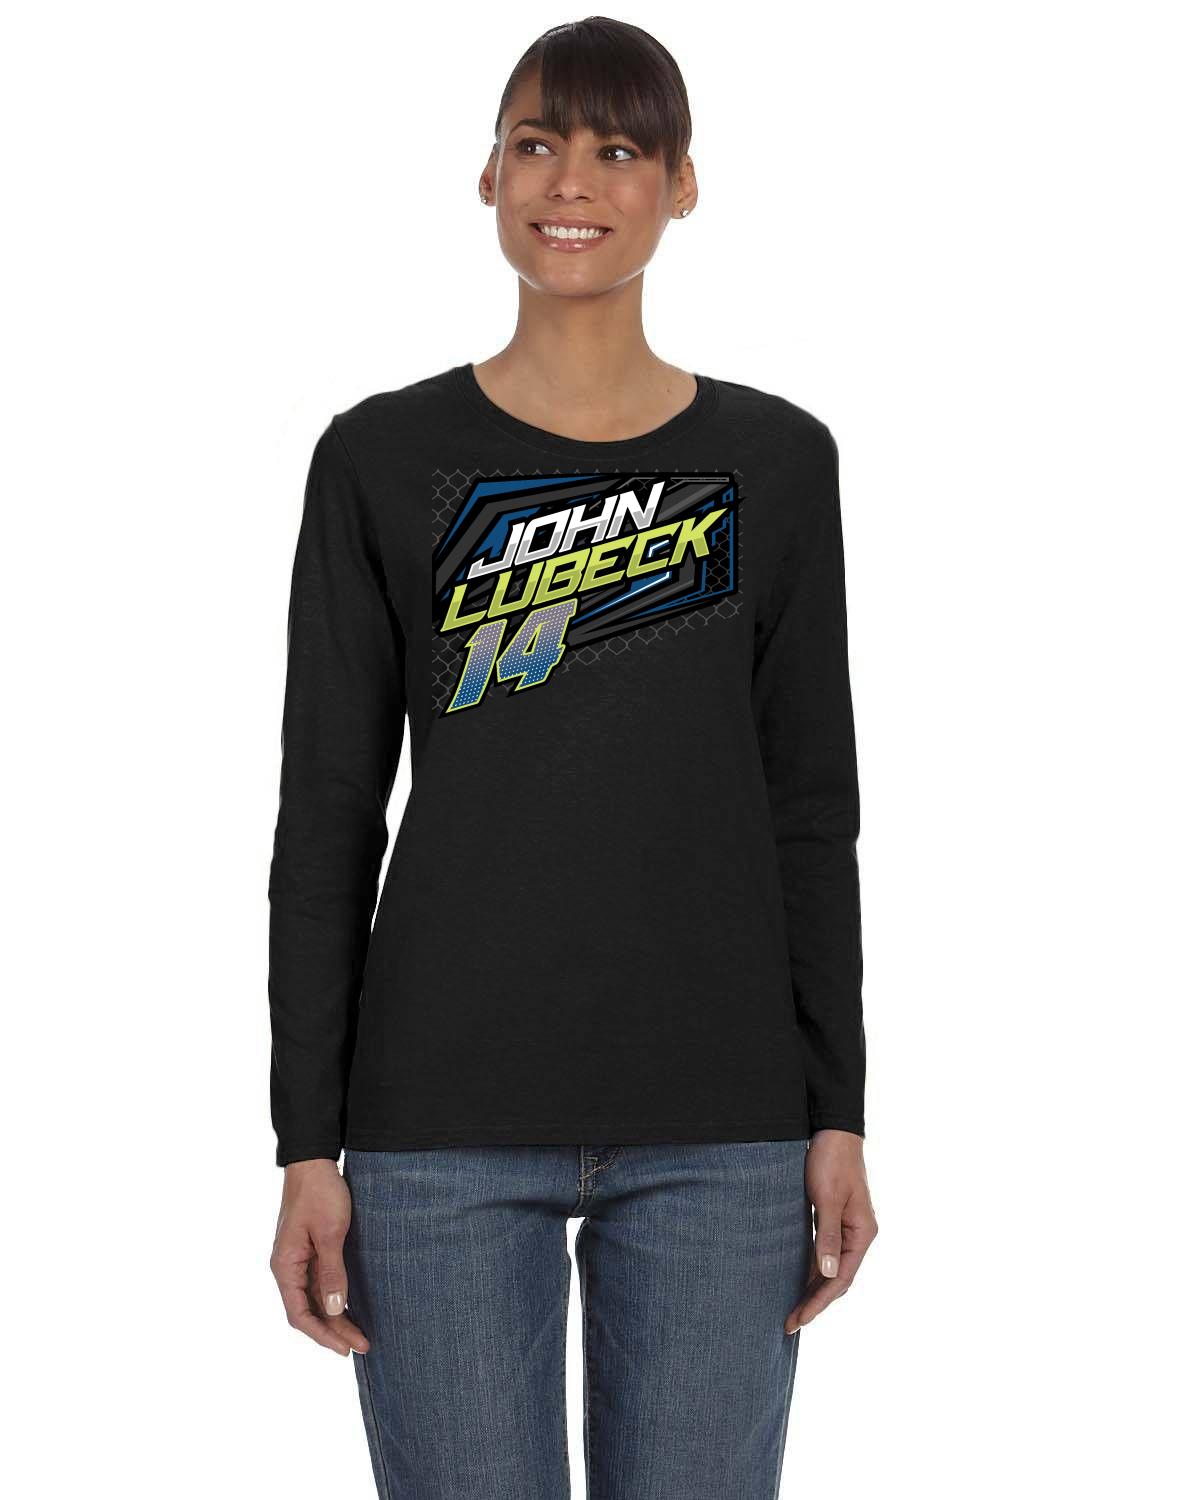 John Lubeck / Upfront Motorsports Ladies' Long-Sleeve T-Shirt